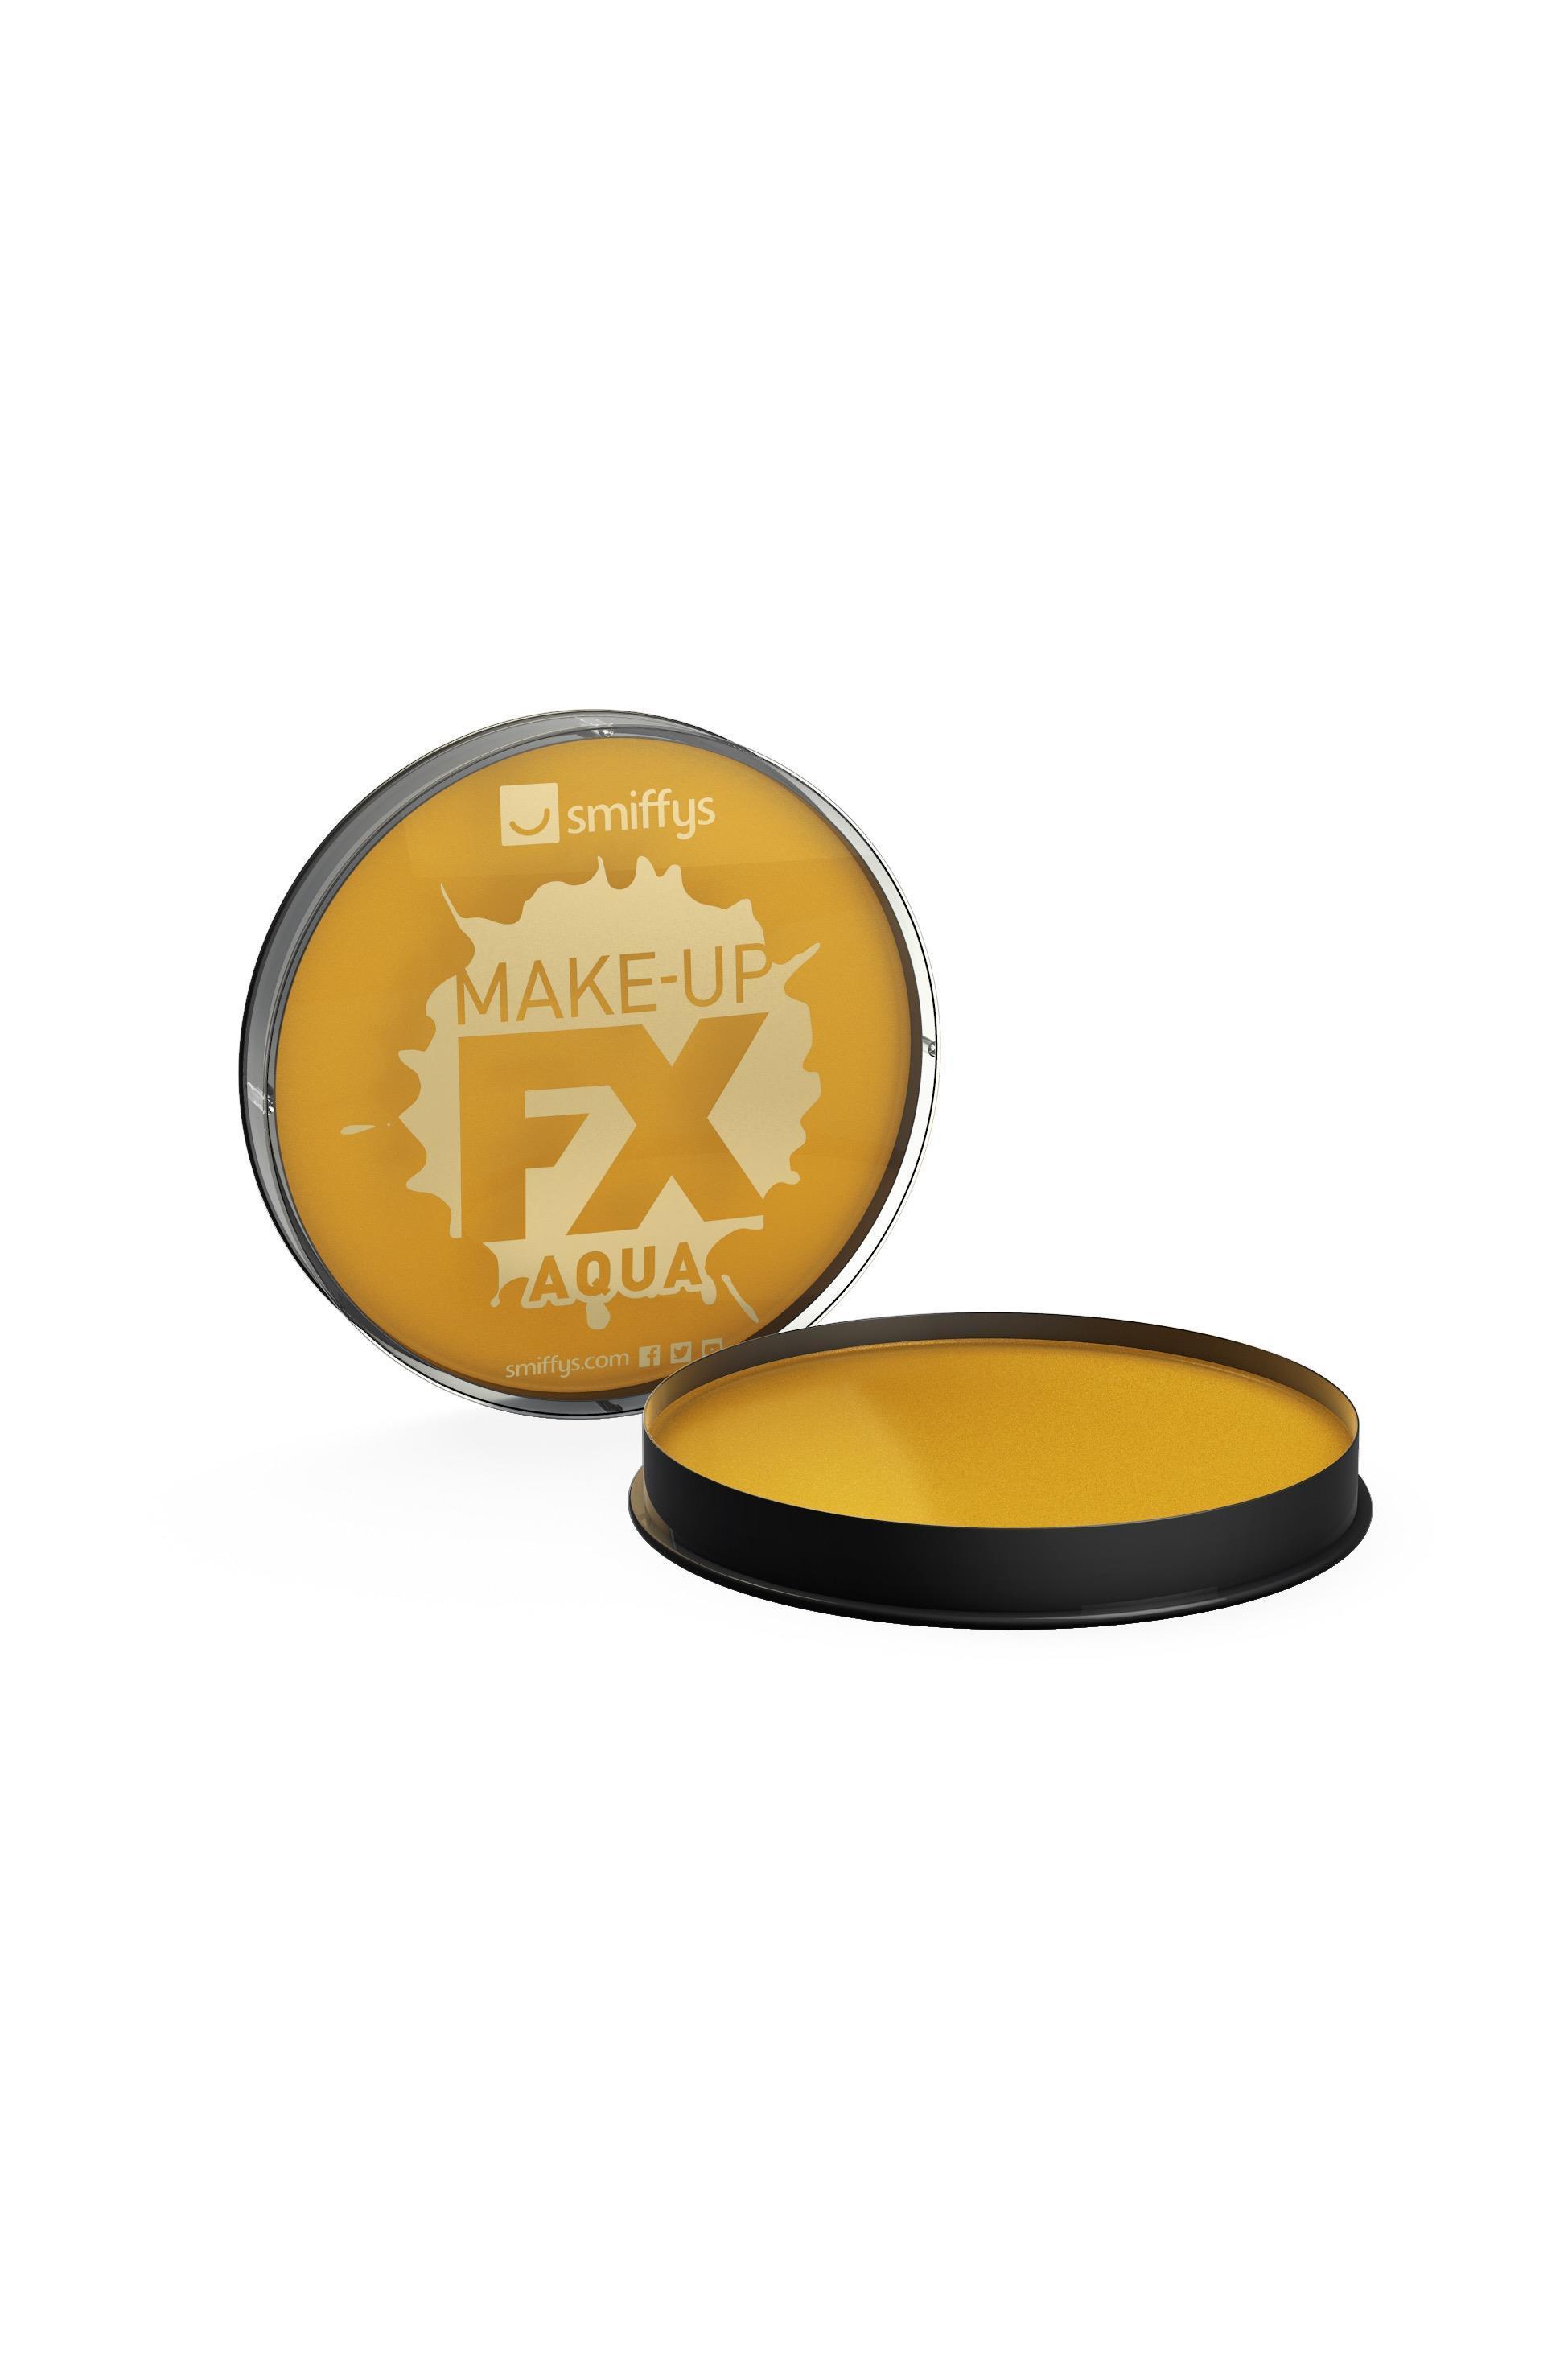 Smiffys Make-Up FX Metallic Gold